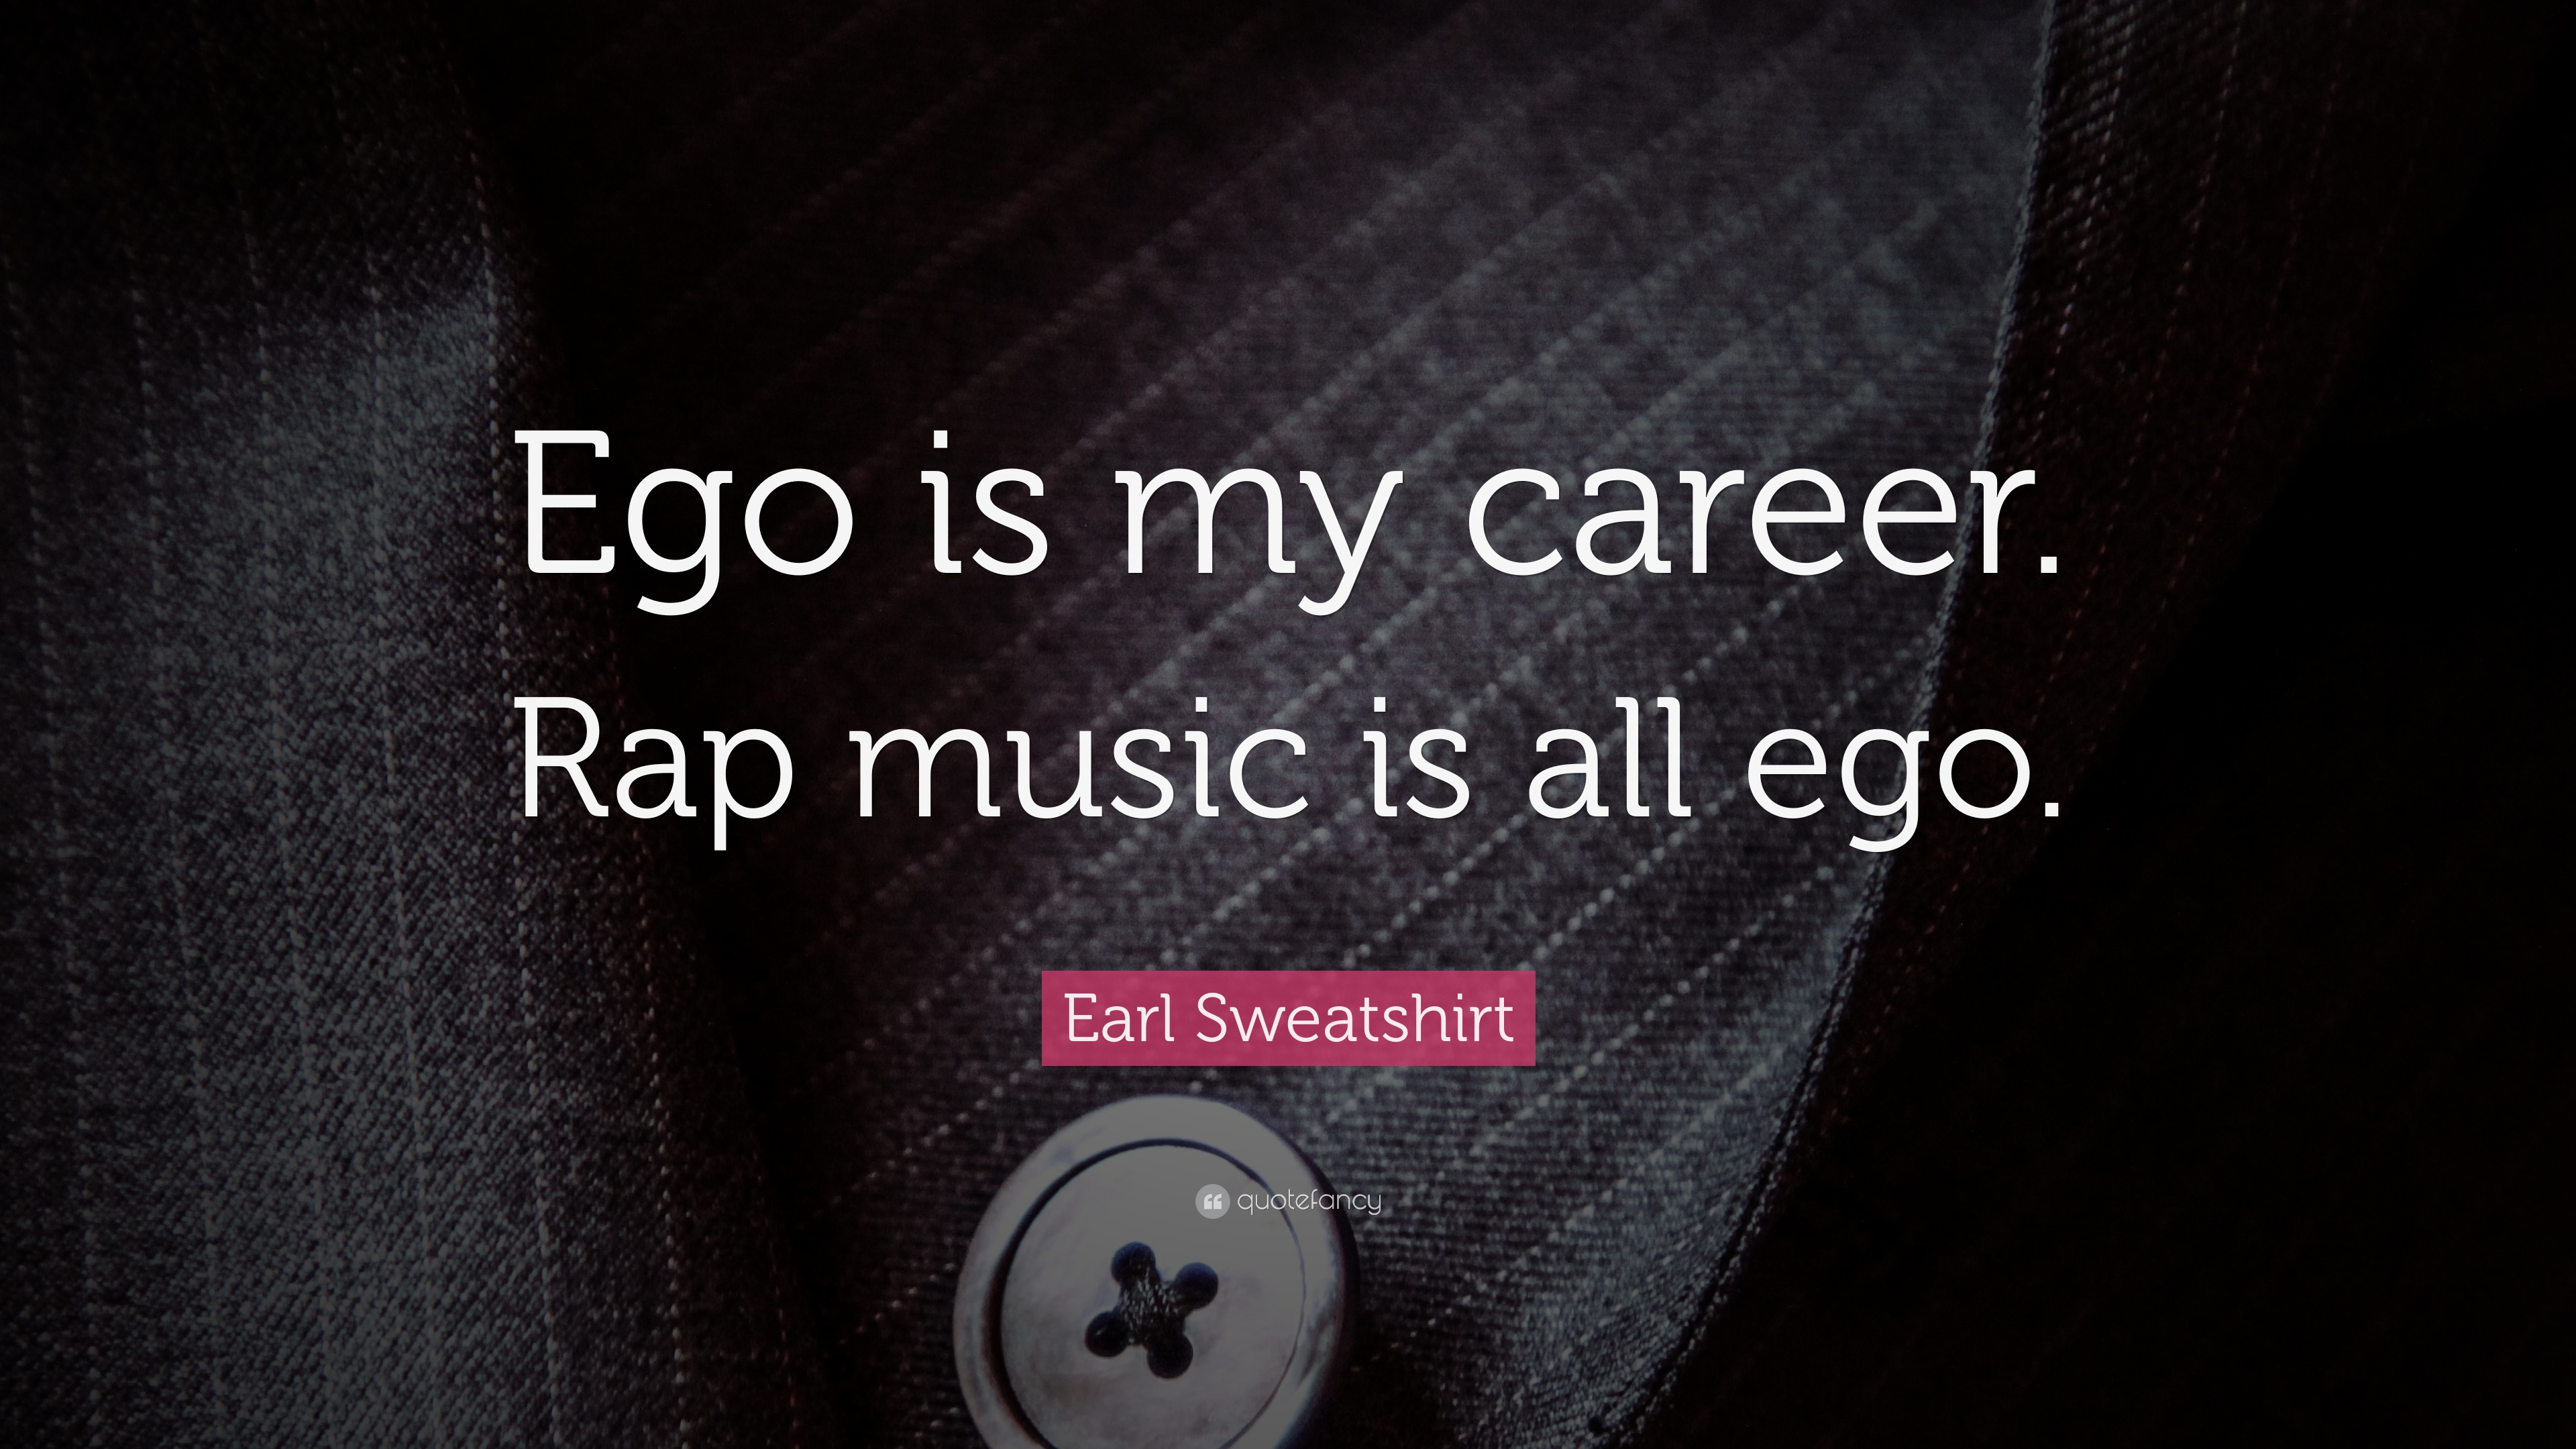 Earl Sweatshirt Quote: “Ego is my career. Rap music is all ego.” 7